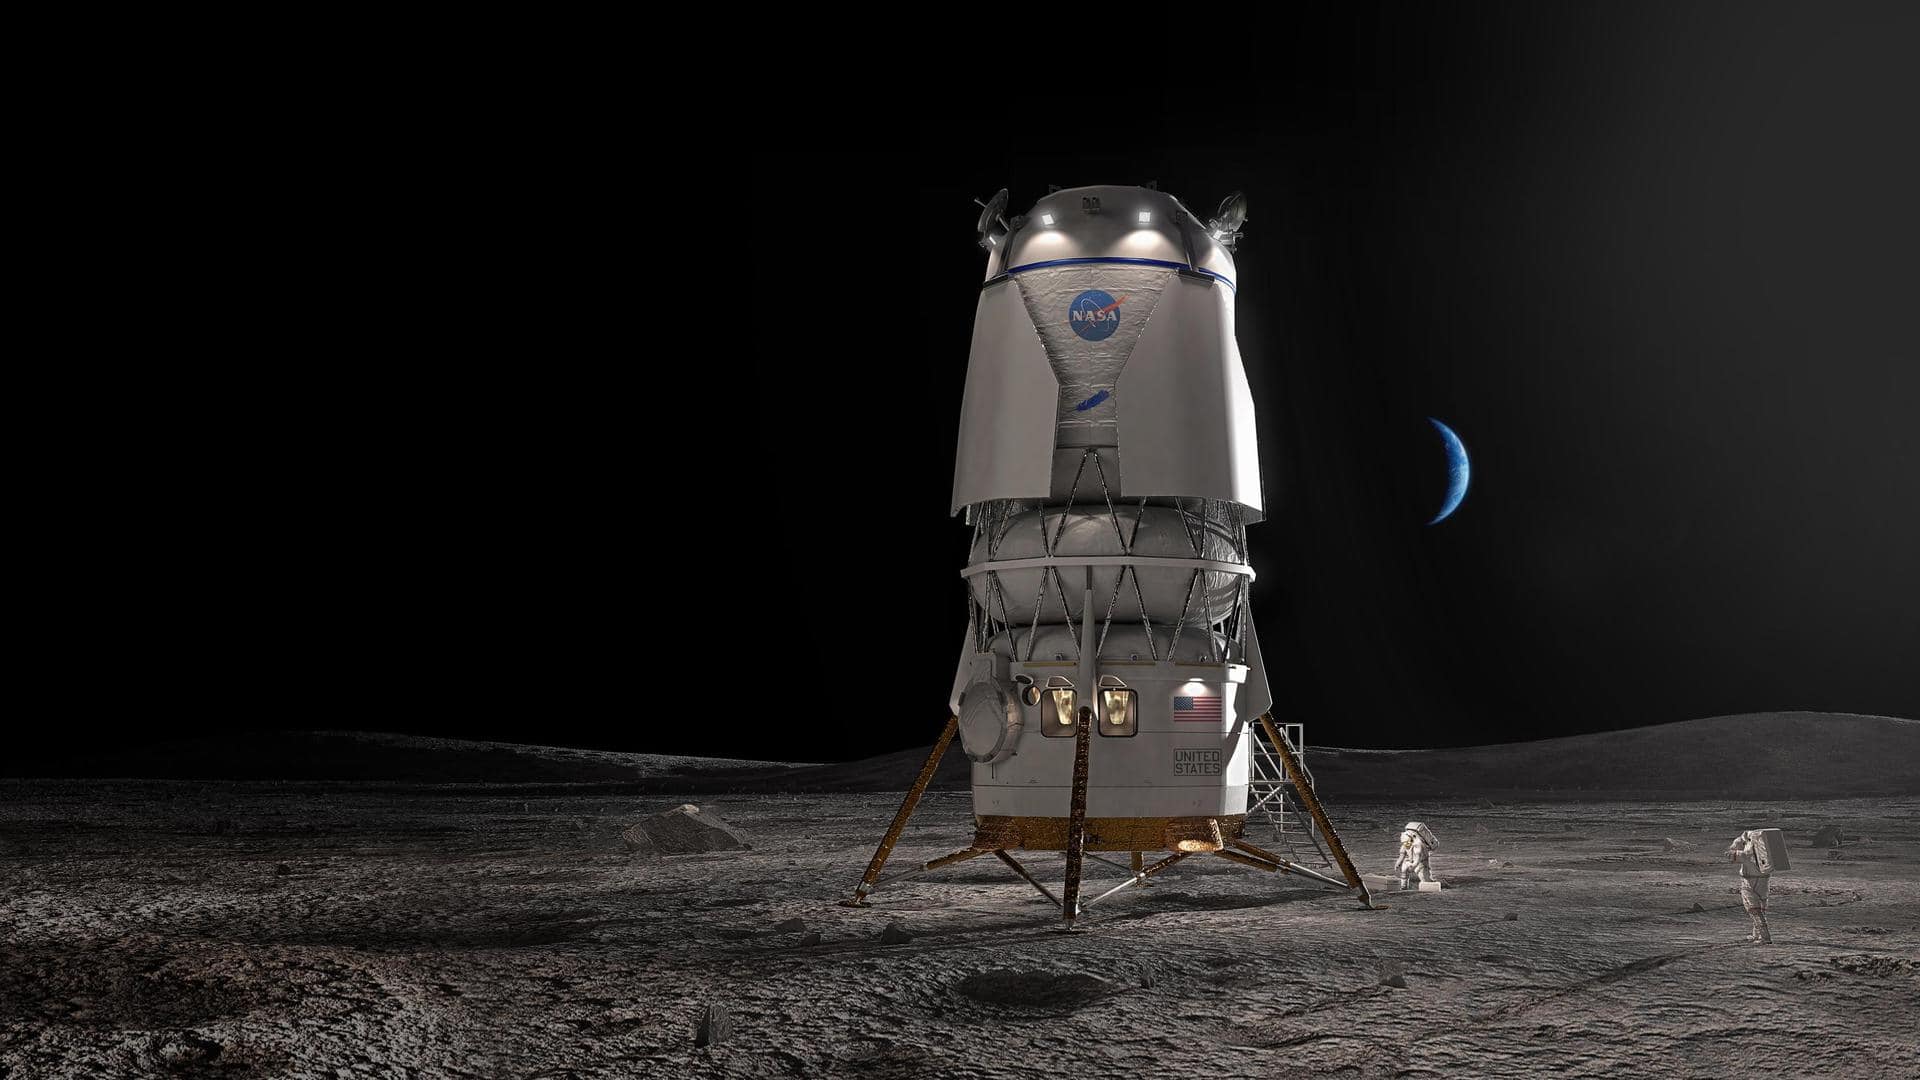 Blue Origin to build NASA's second human-landing system on Moon